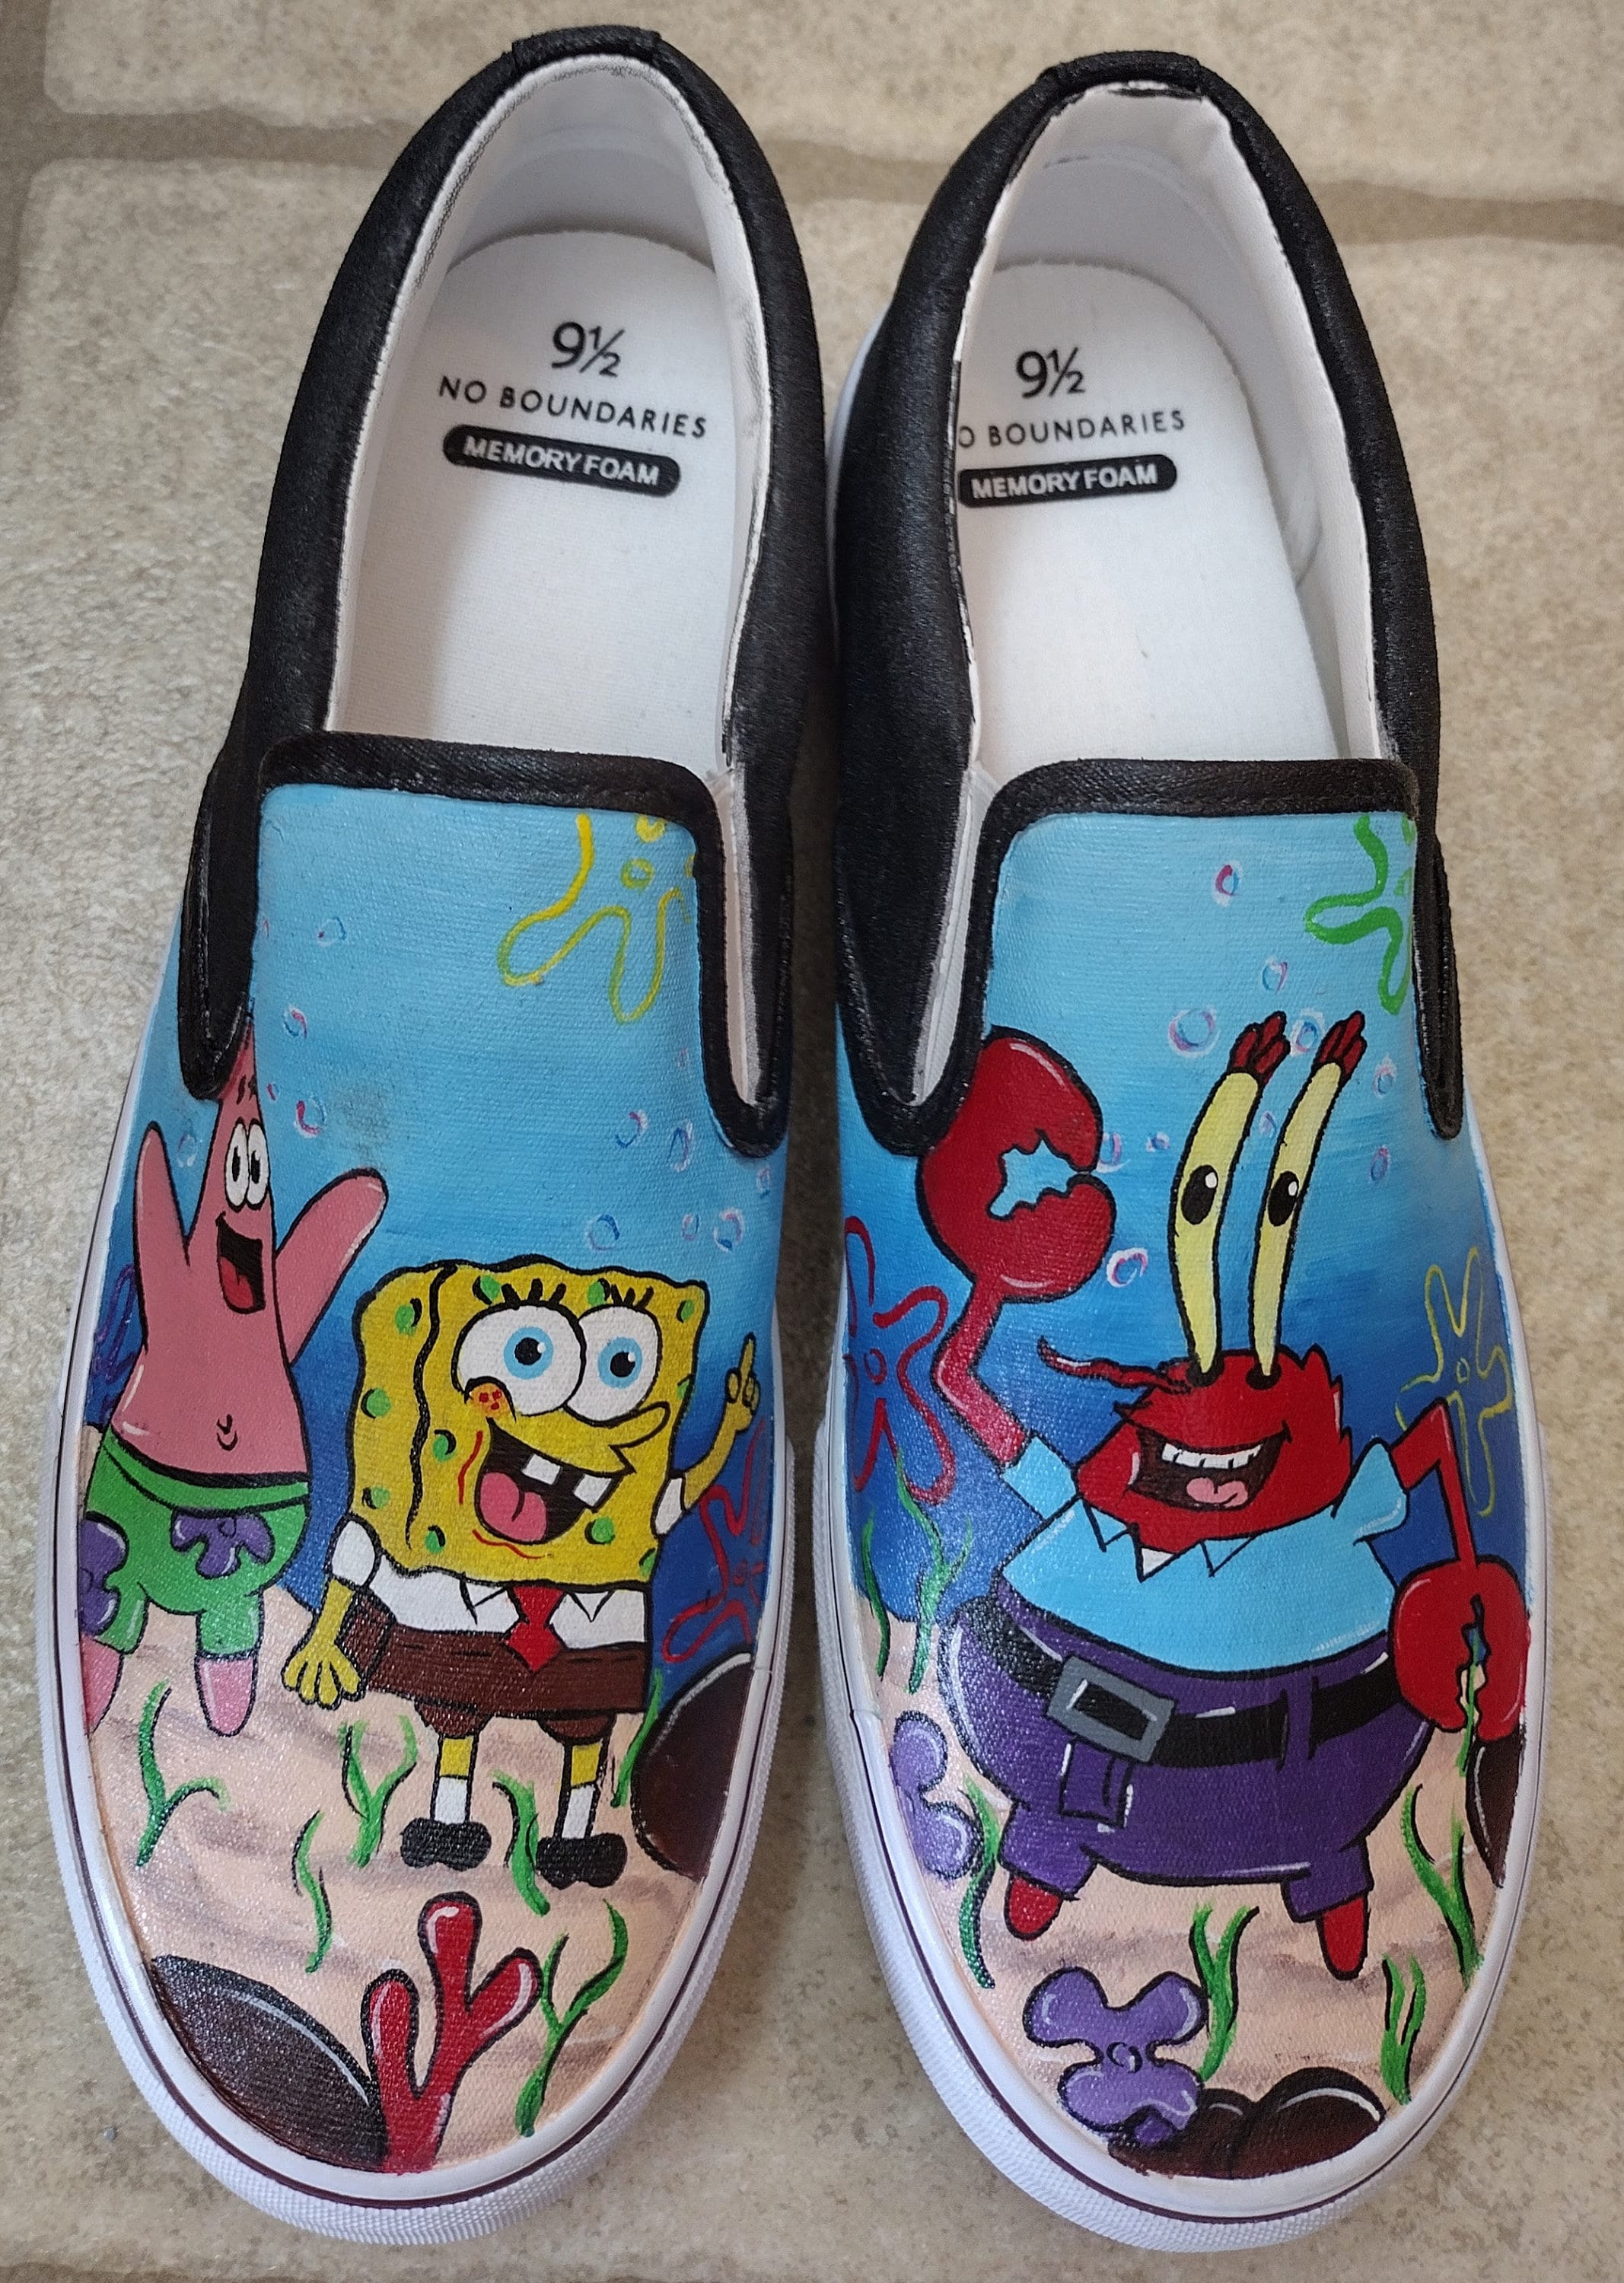 Spongebob Painted Shoes - Etsy